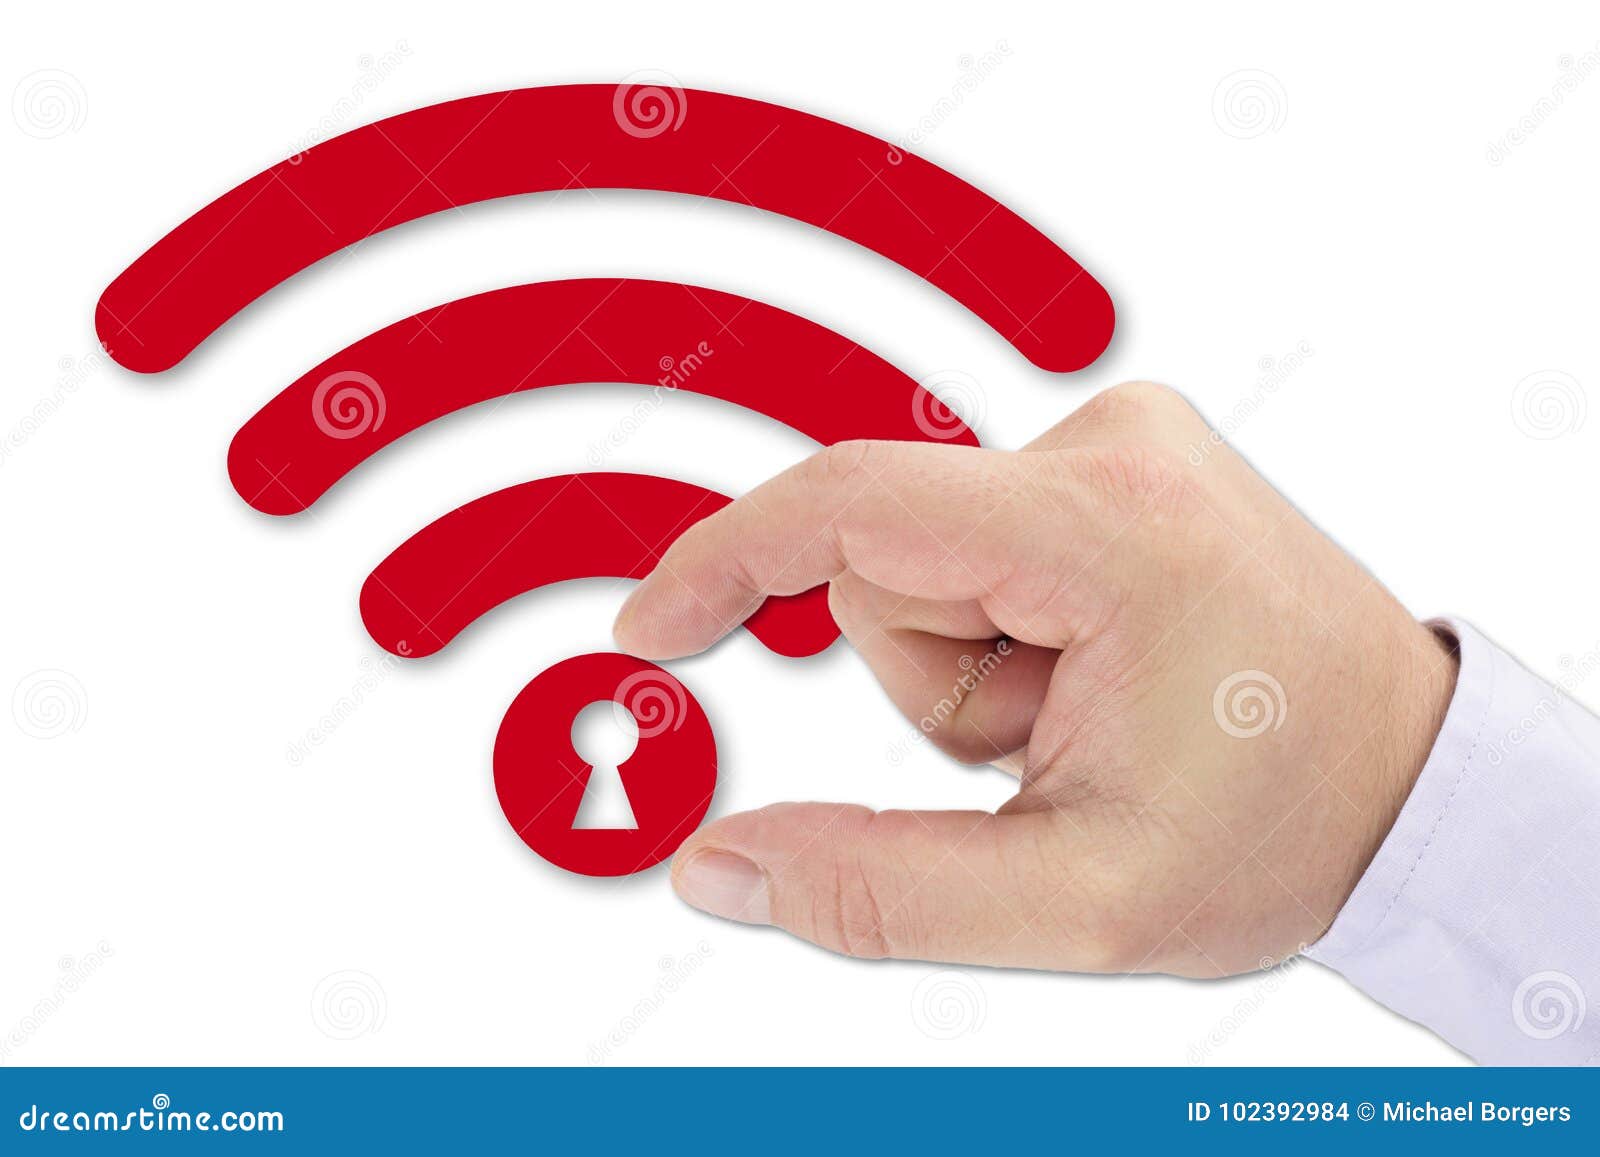 thief wpa2 backdoor krack cybersecurity blue wifi 